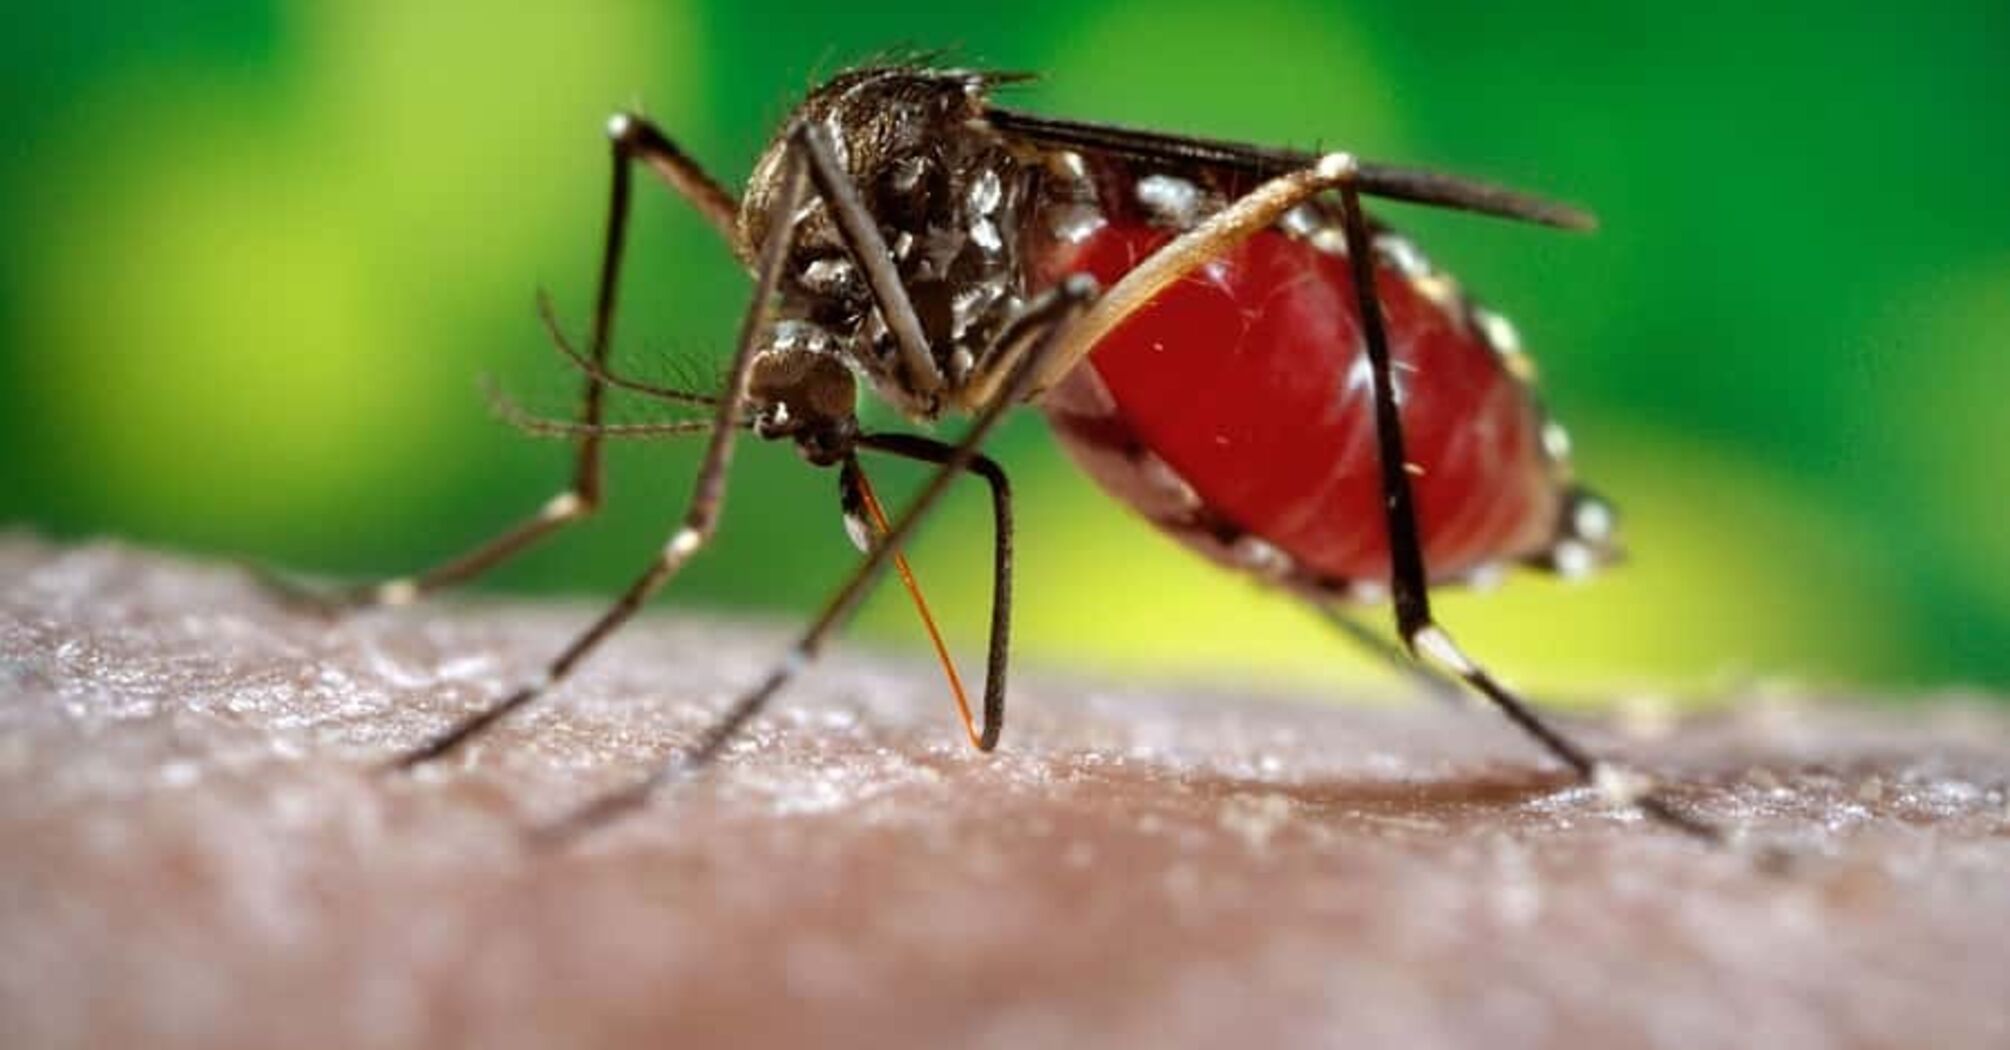 New case of Dengue virus reported in Hawaii